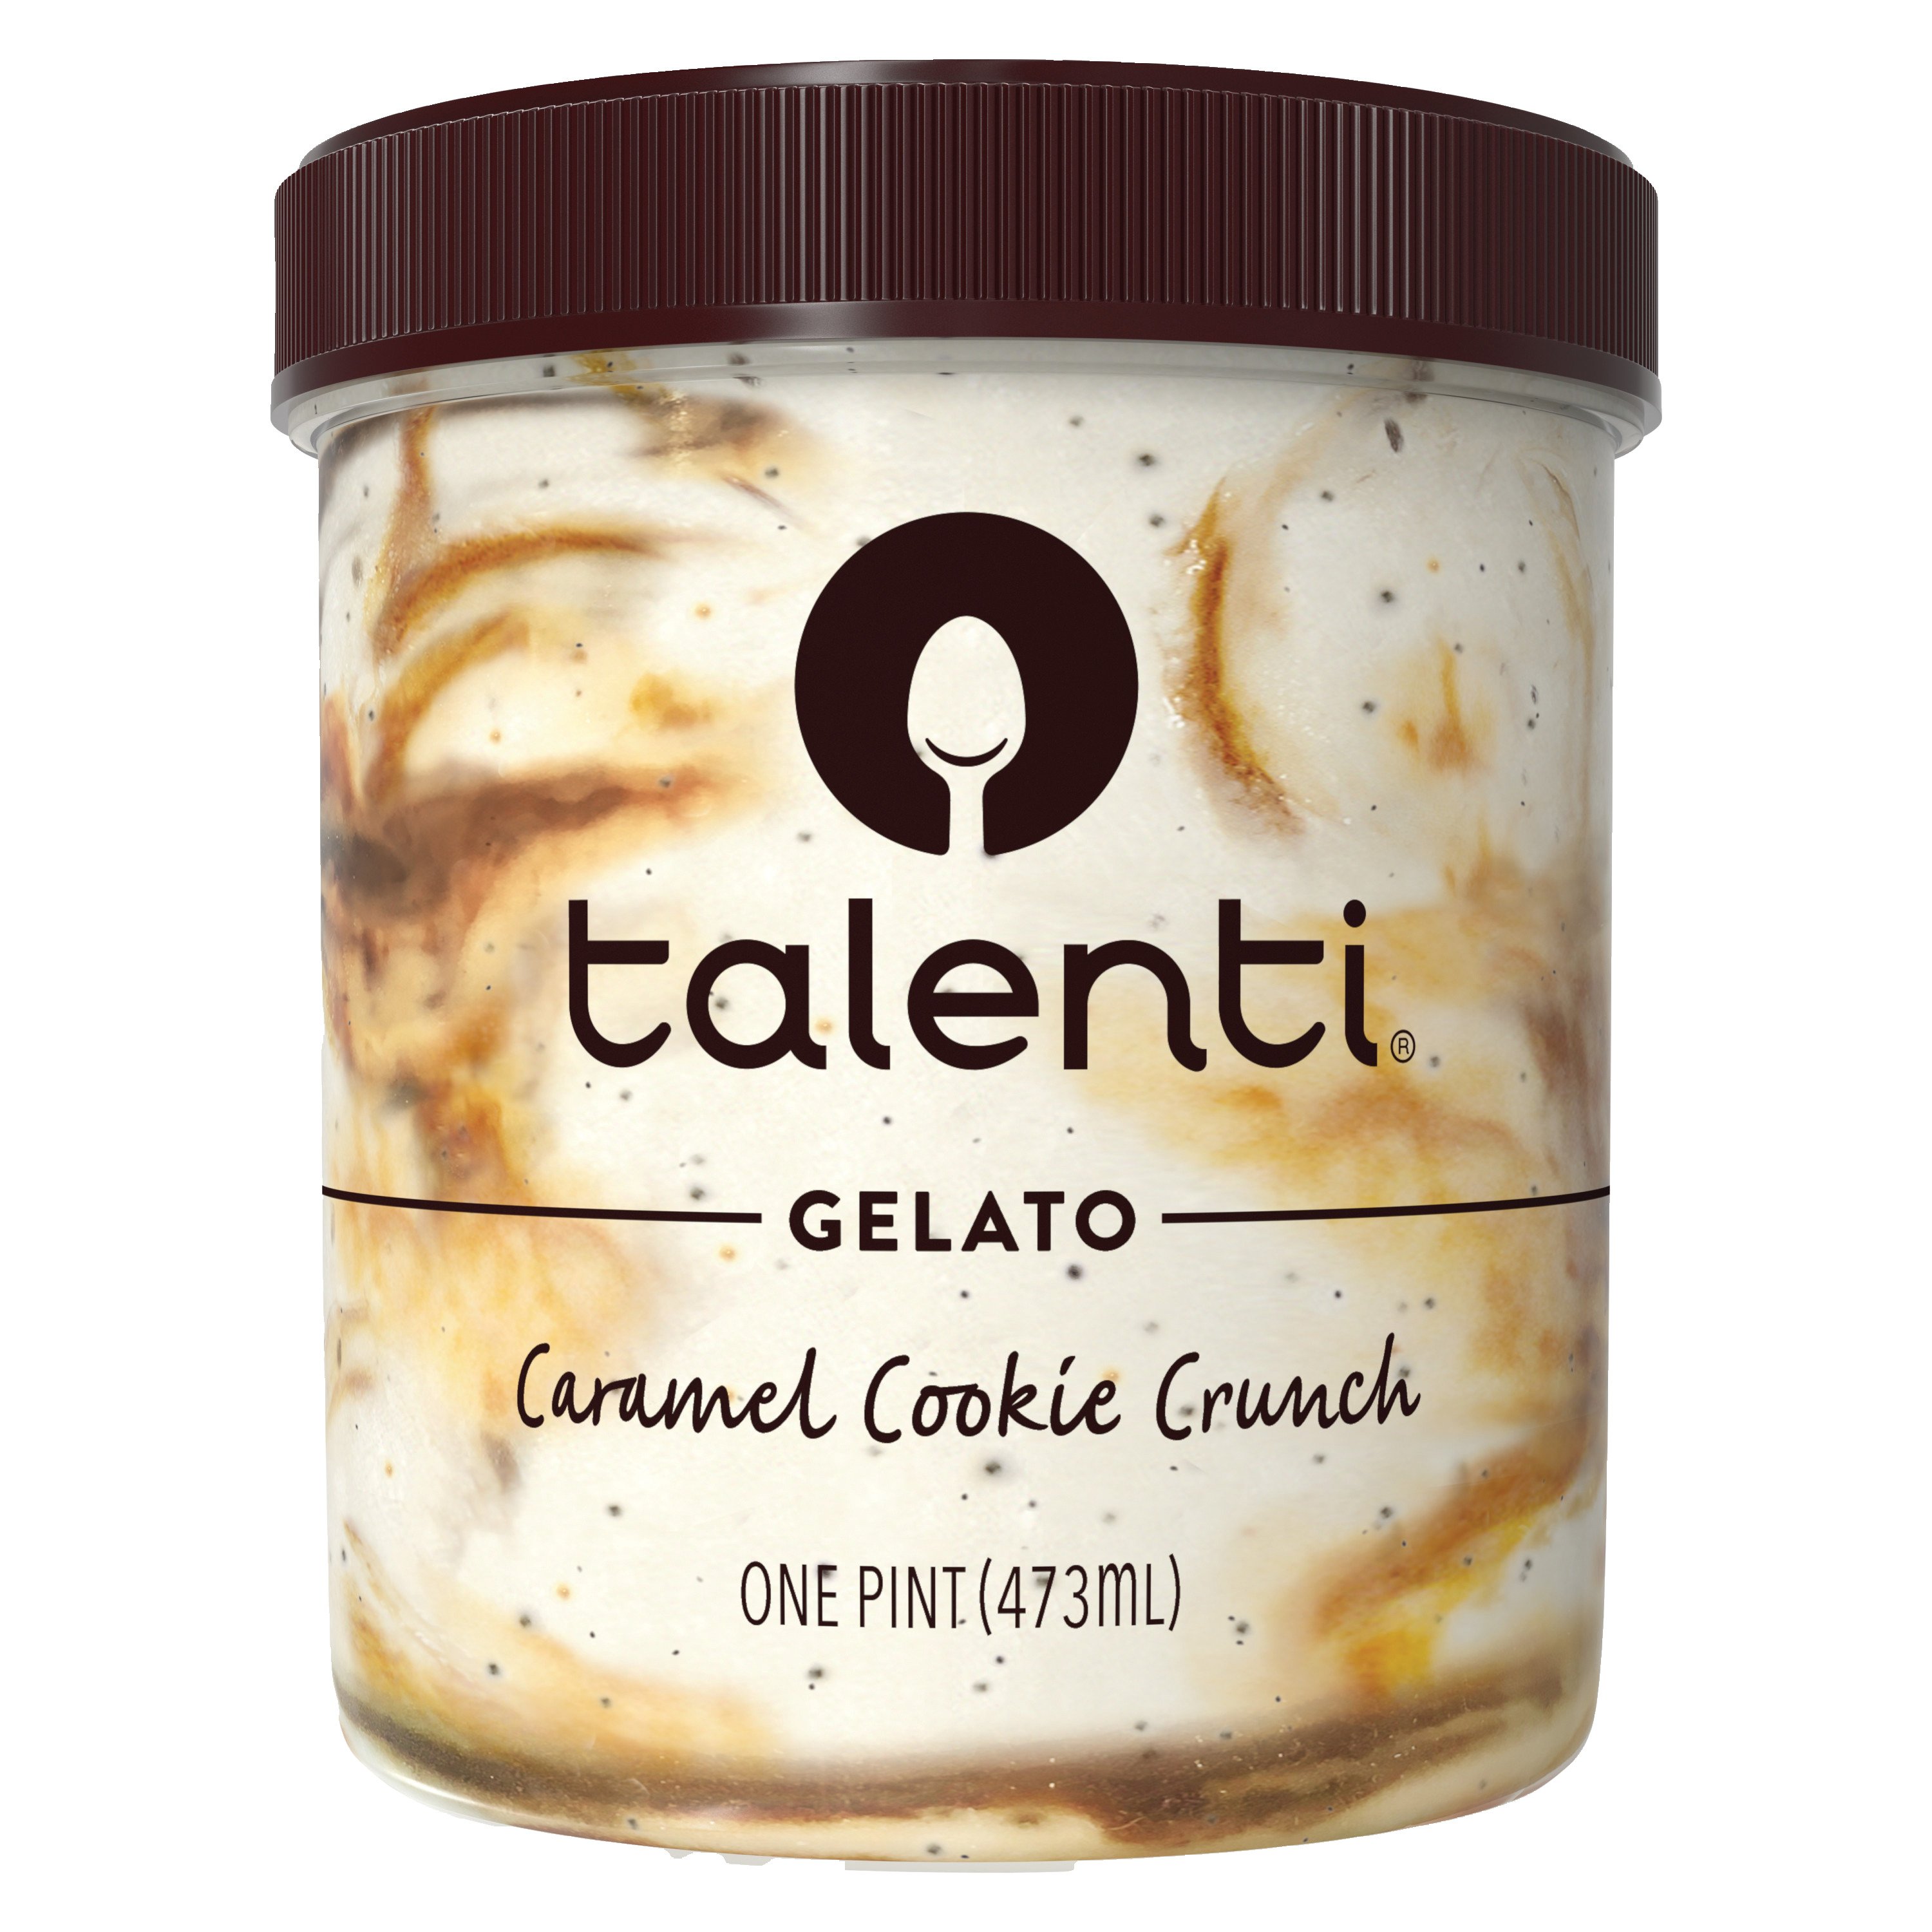 Talenti Caramel Cookie Crunch Gelato Shop Ice Cream at HEB